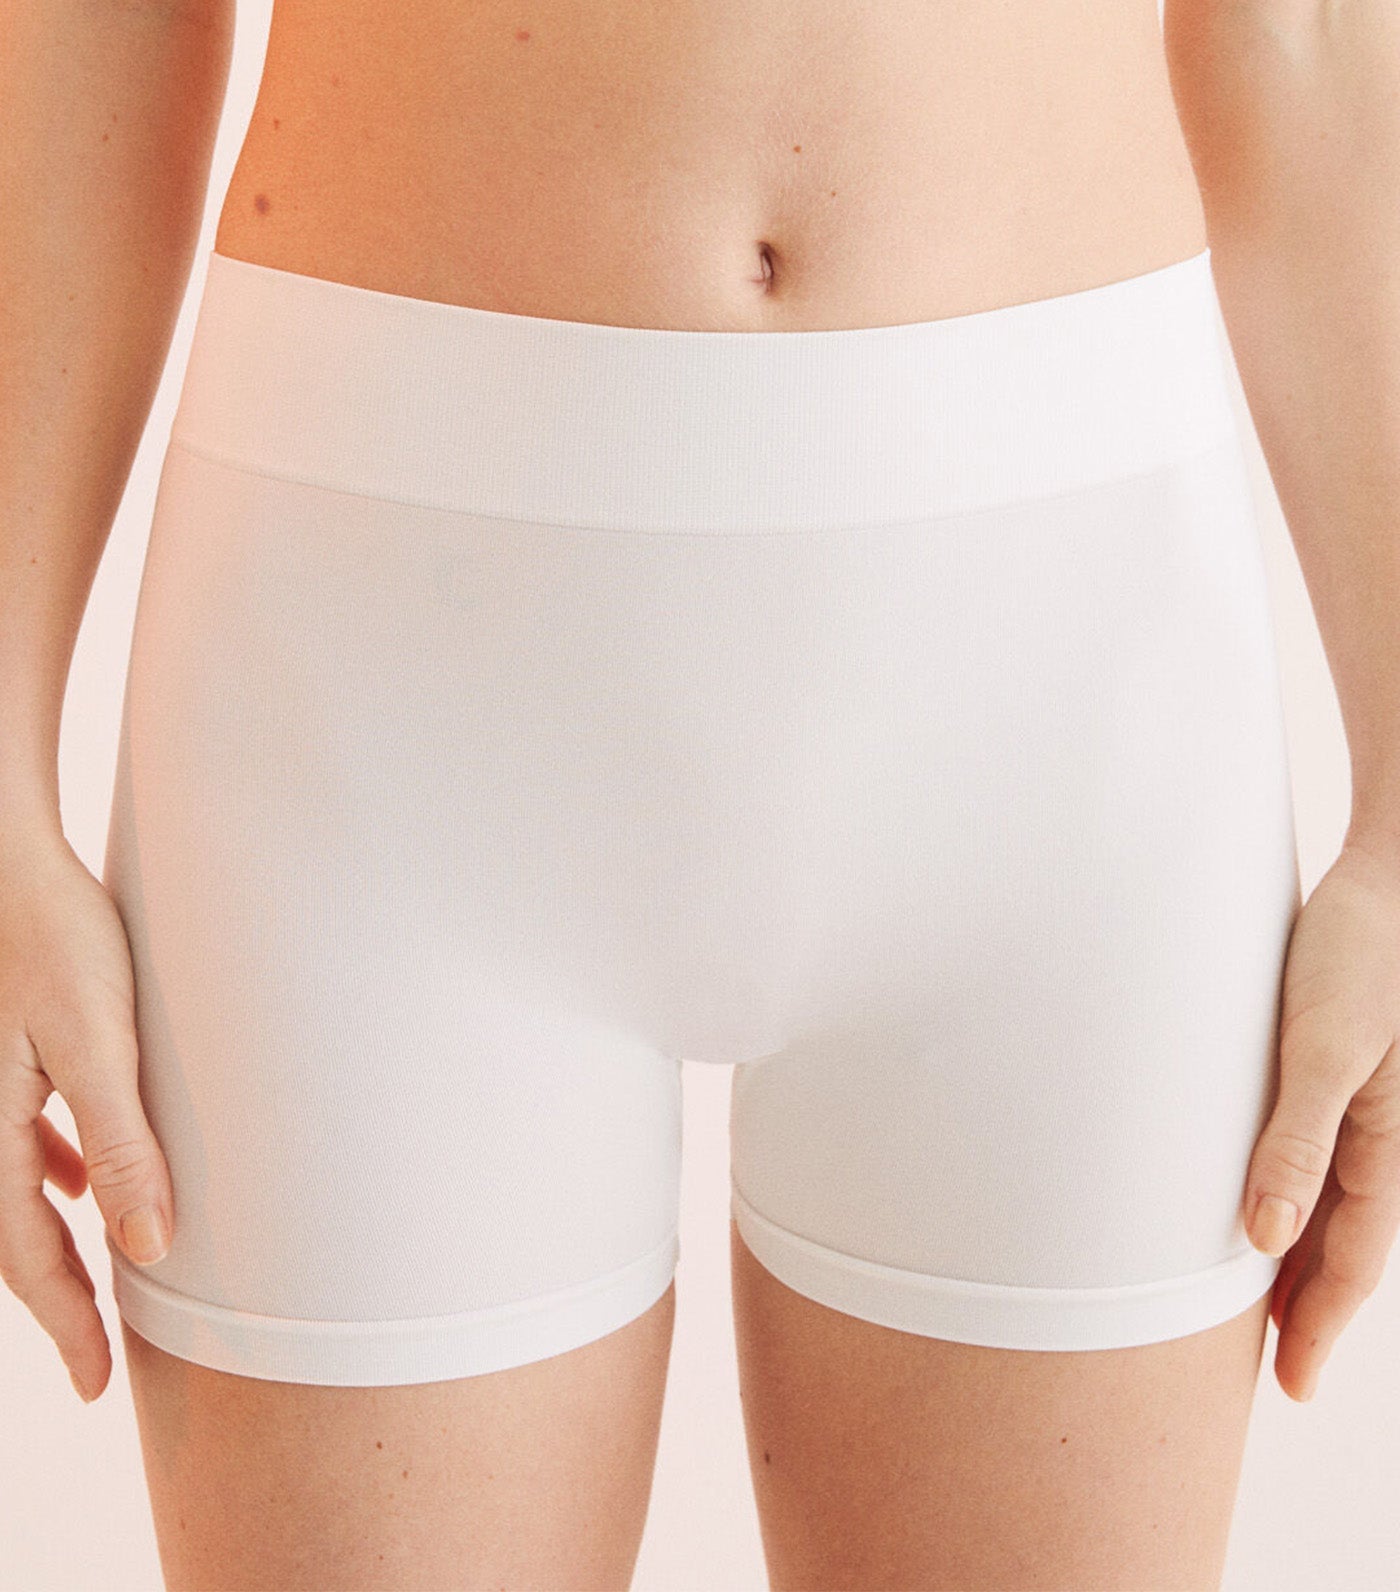 Women's Cotton Boyshort Panty  Track pants women, Women, White shorts